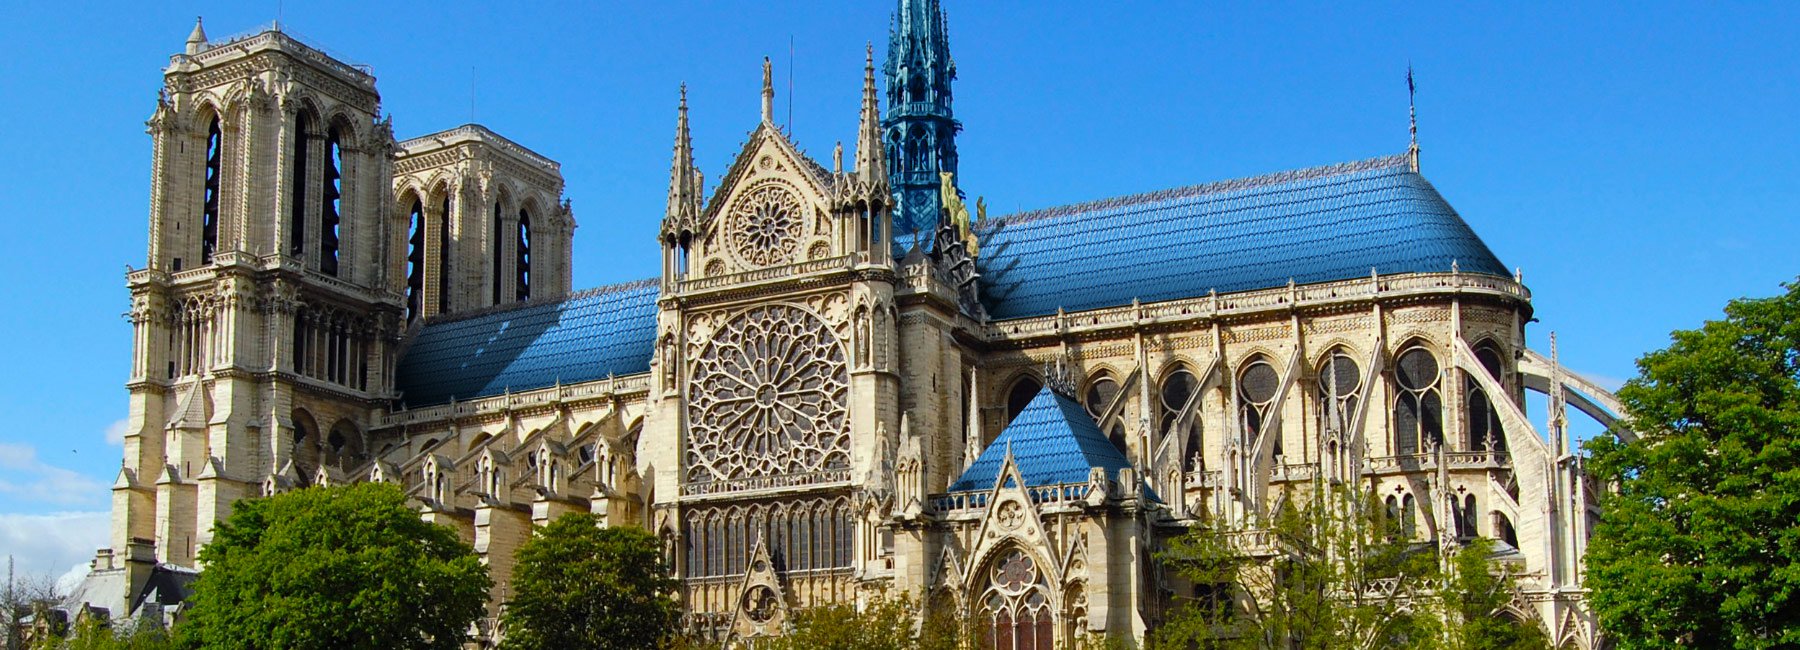 Walking a winding road on Notre Dame rebuild | purple chi blog